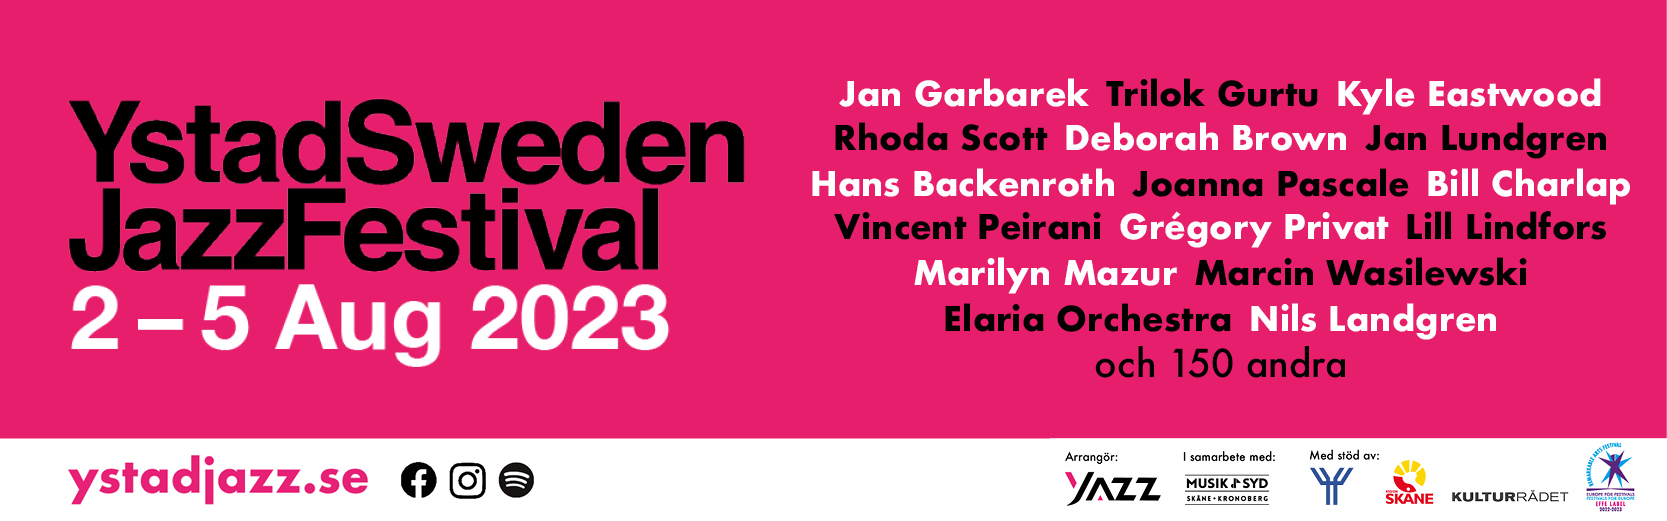 Annons: Ystad Sweden Jazz Festival 2-5 augusti 2023